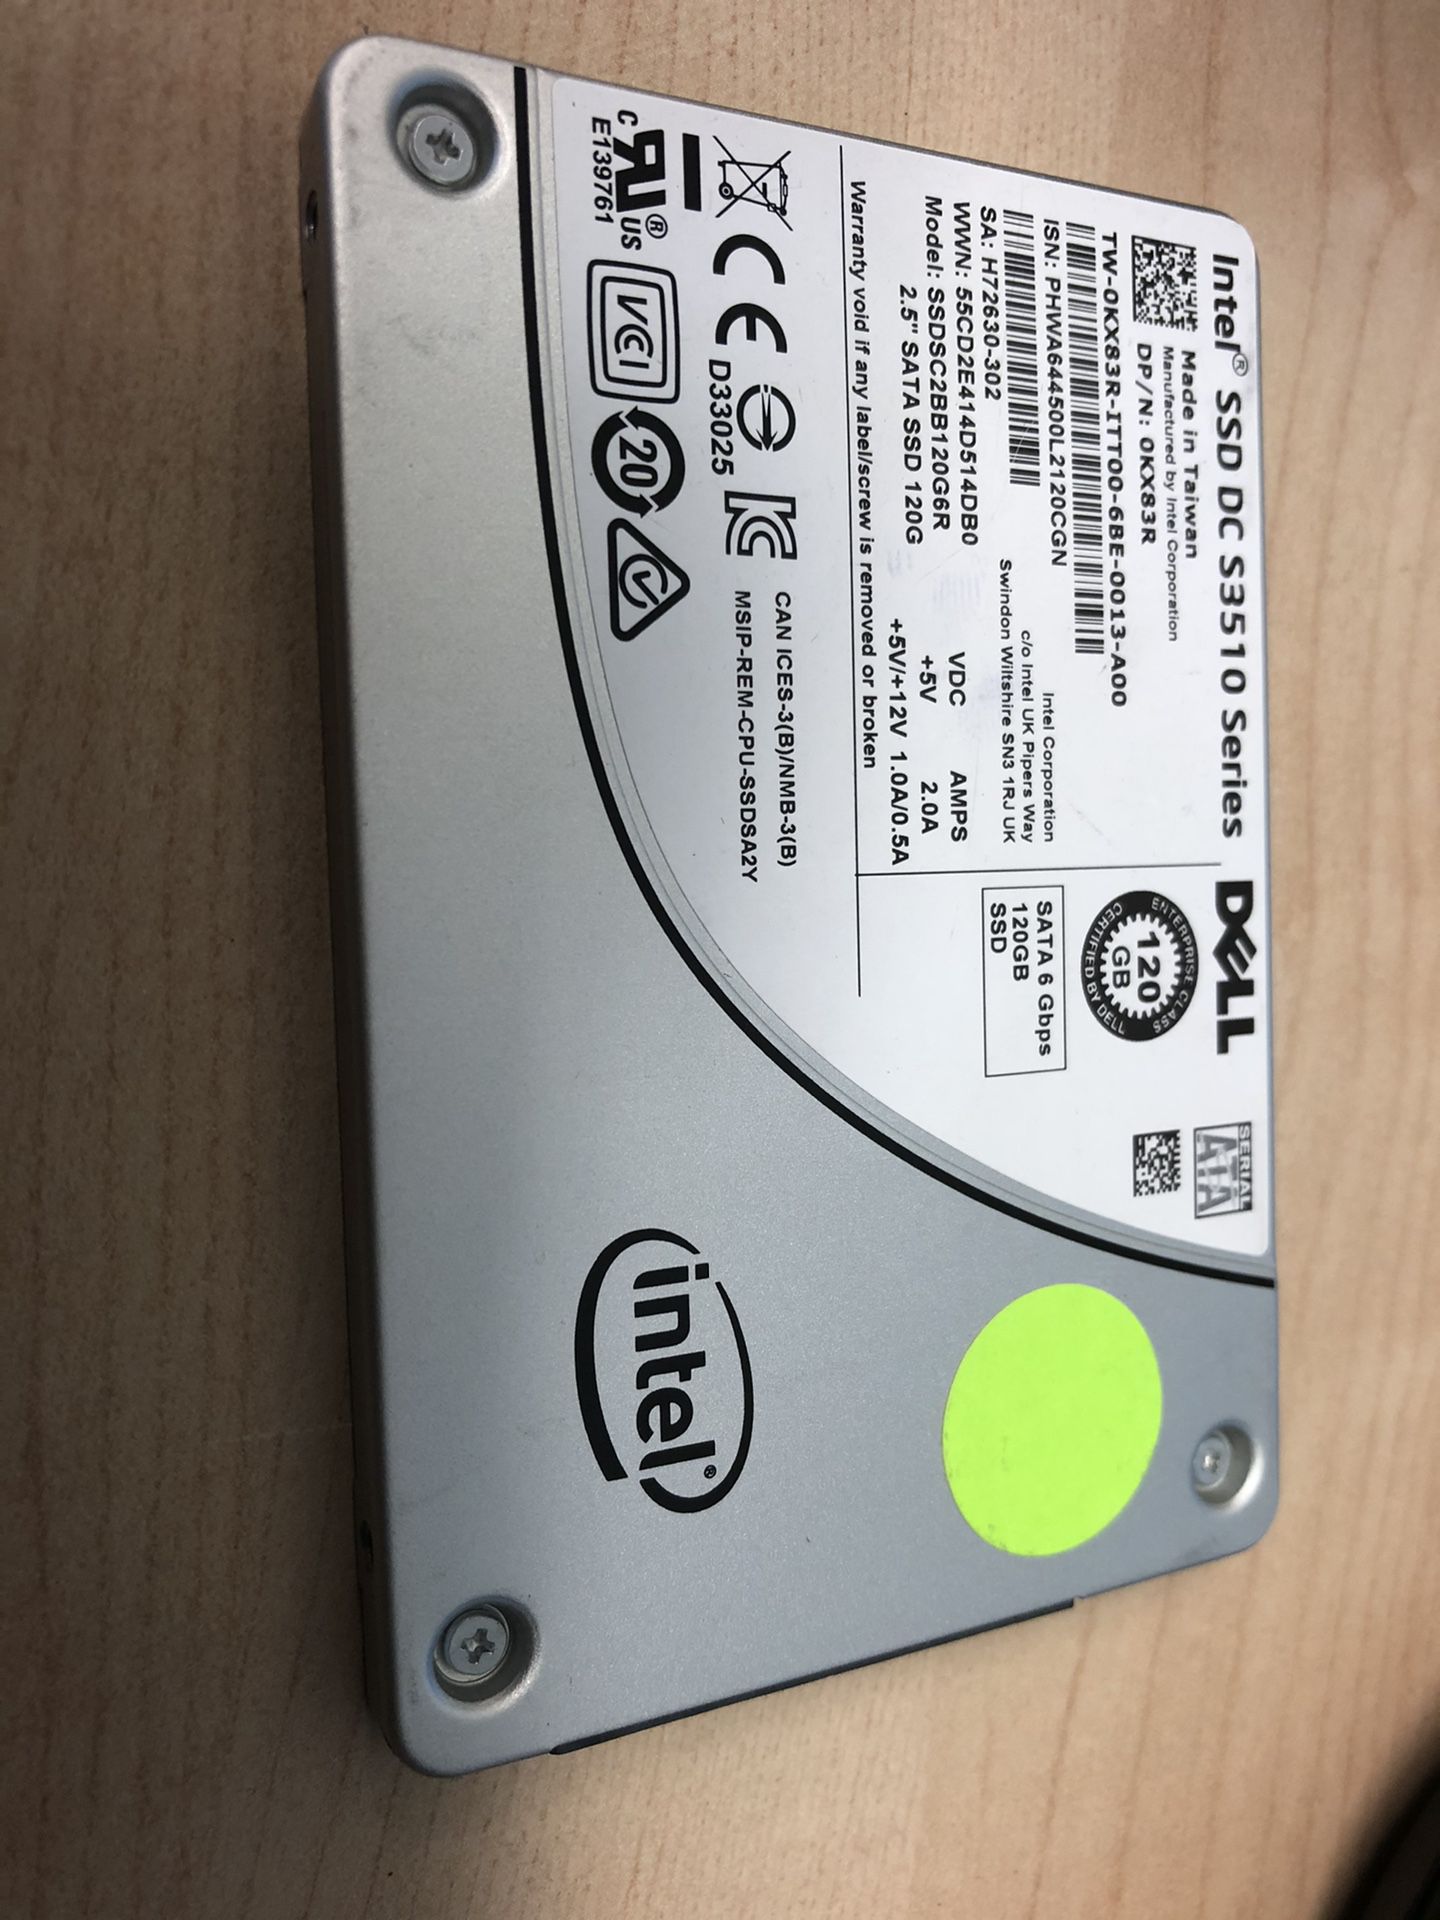 Intel SSD DC S3510 series - 120GB